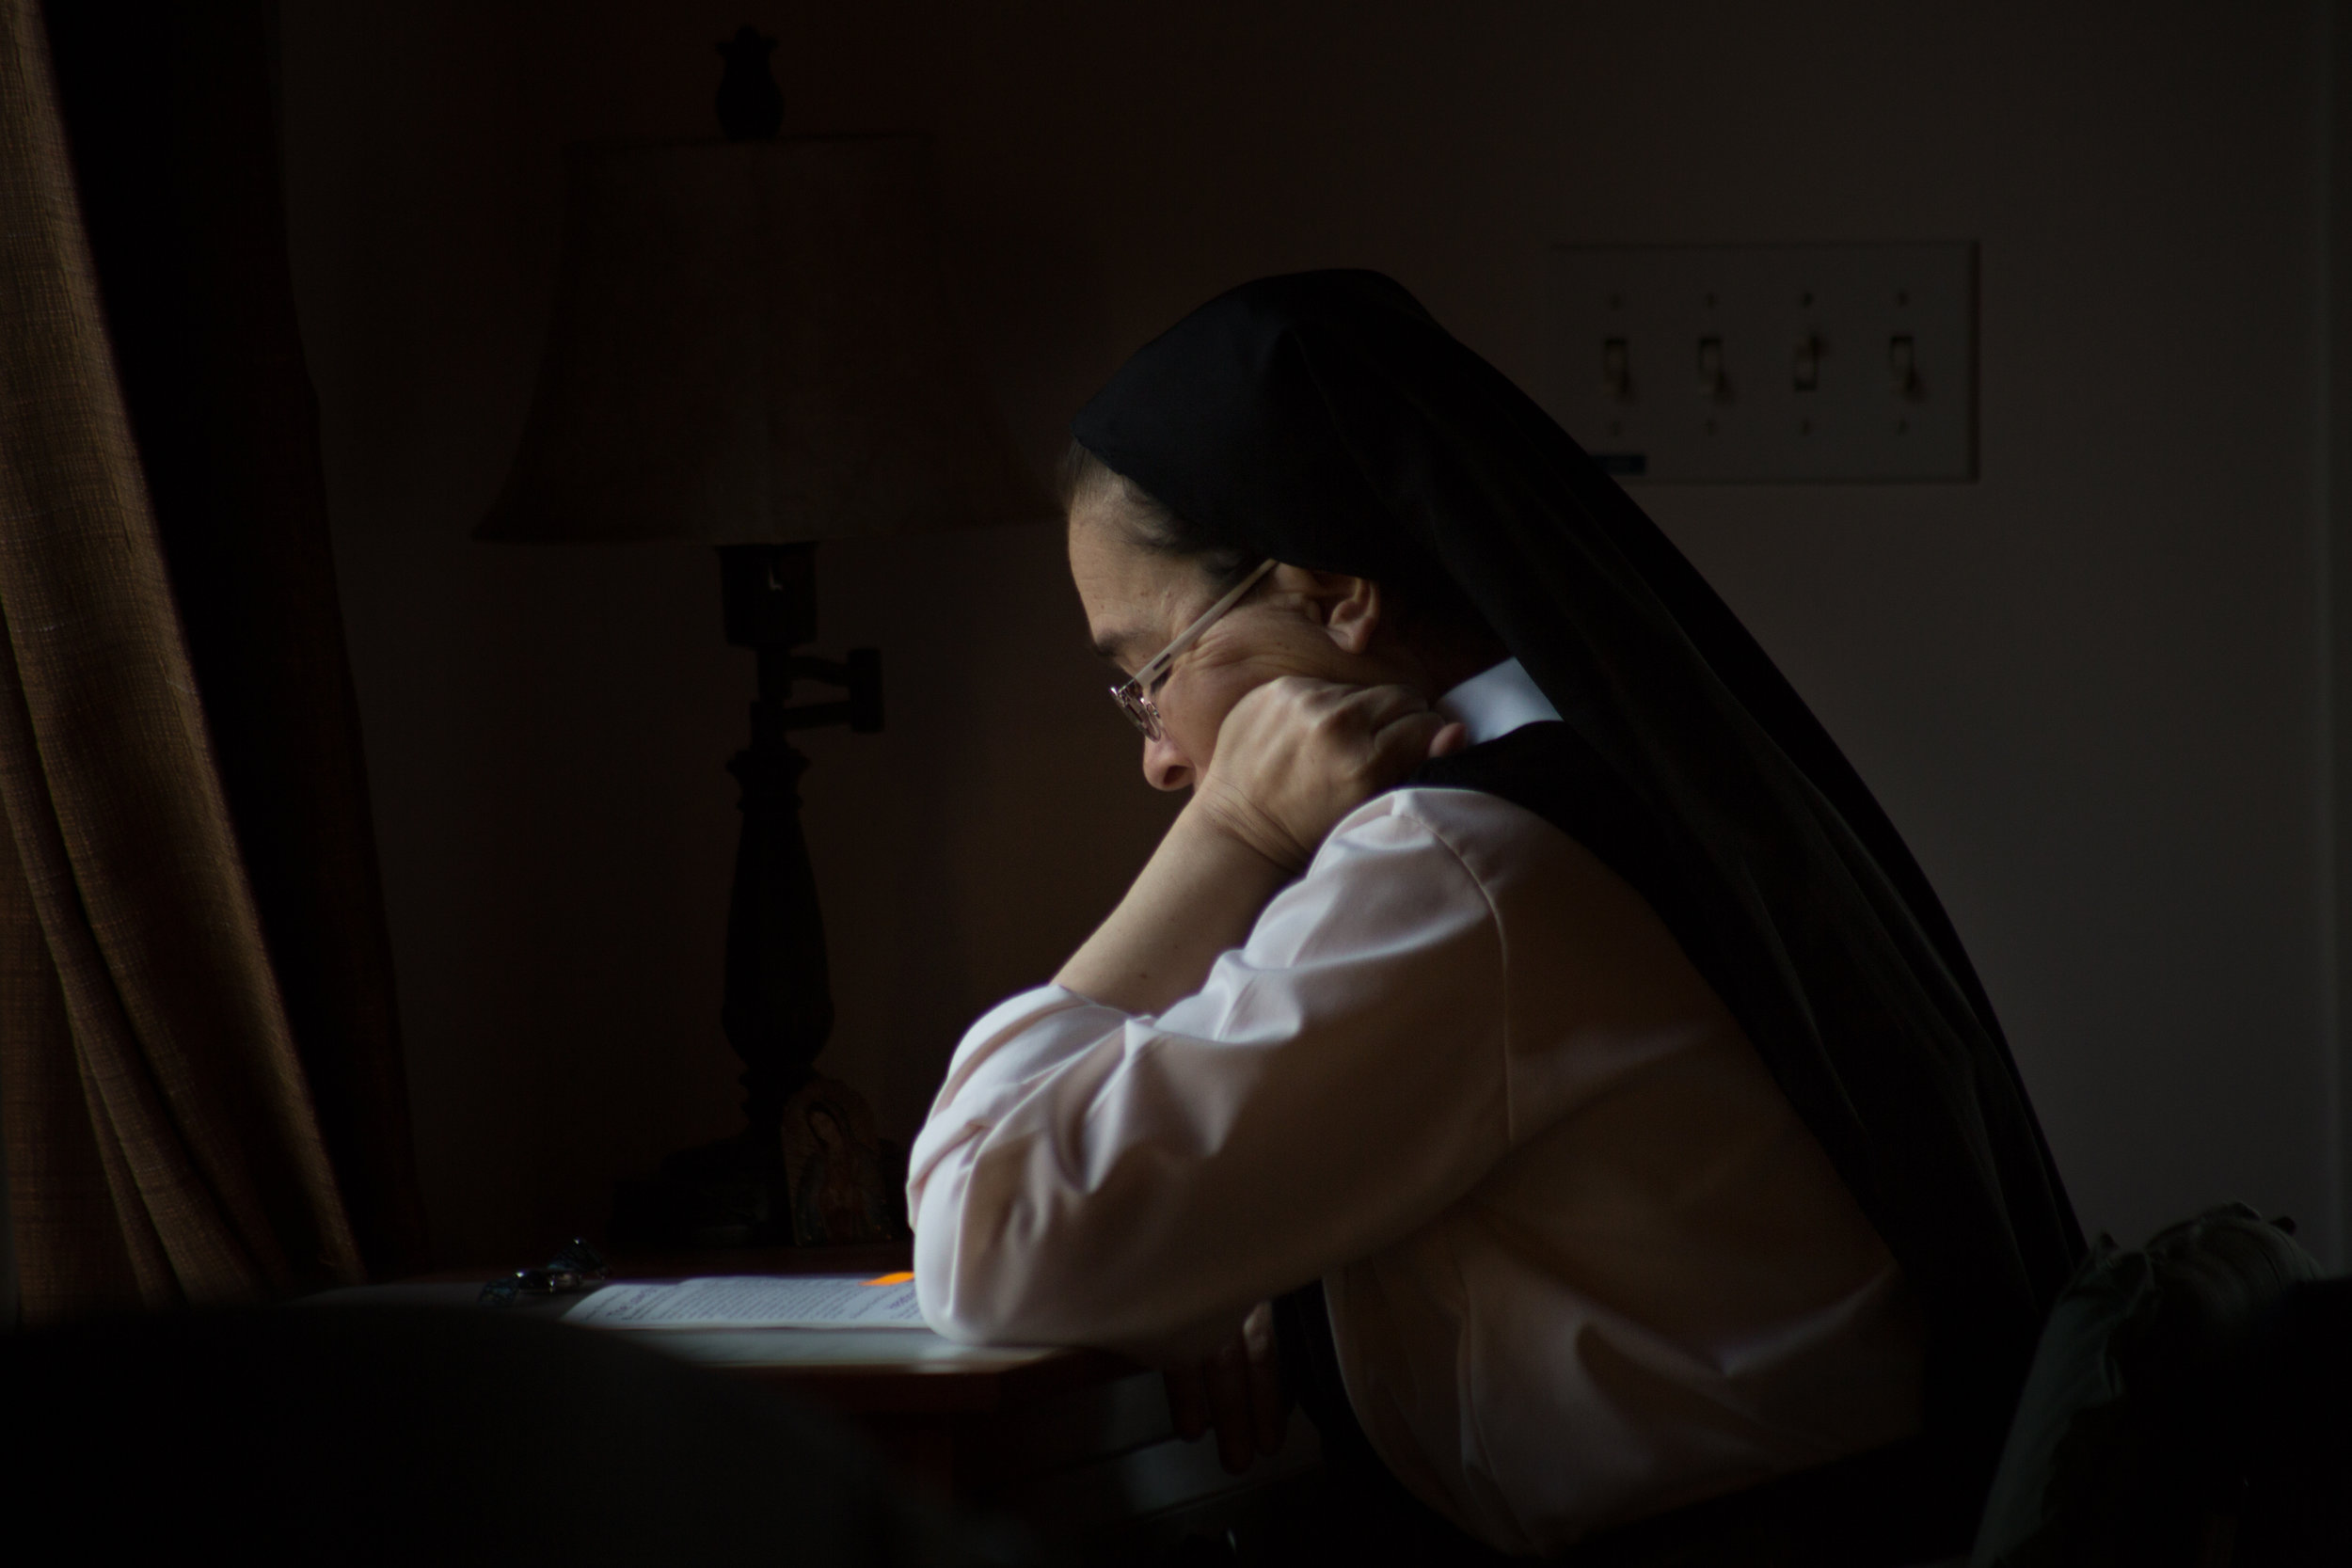  Sister Jacqueline mediates during evening vespers March 30, 2019 in Crozet, Virginia. 